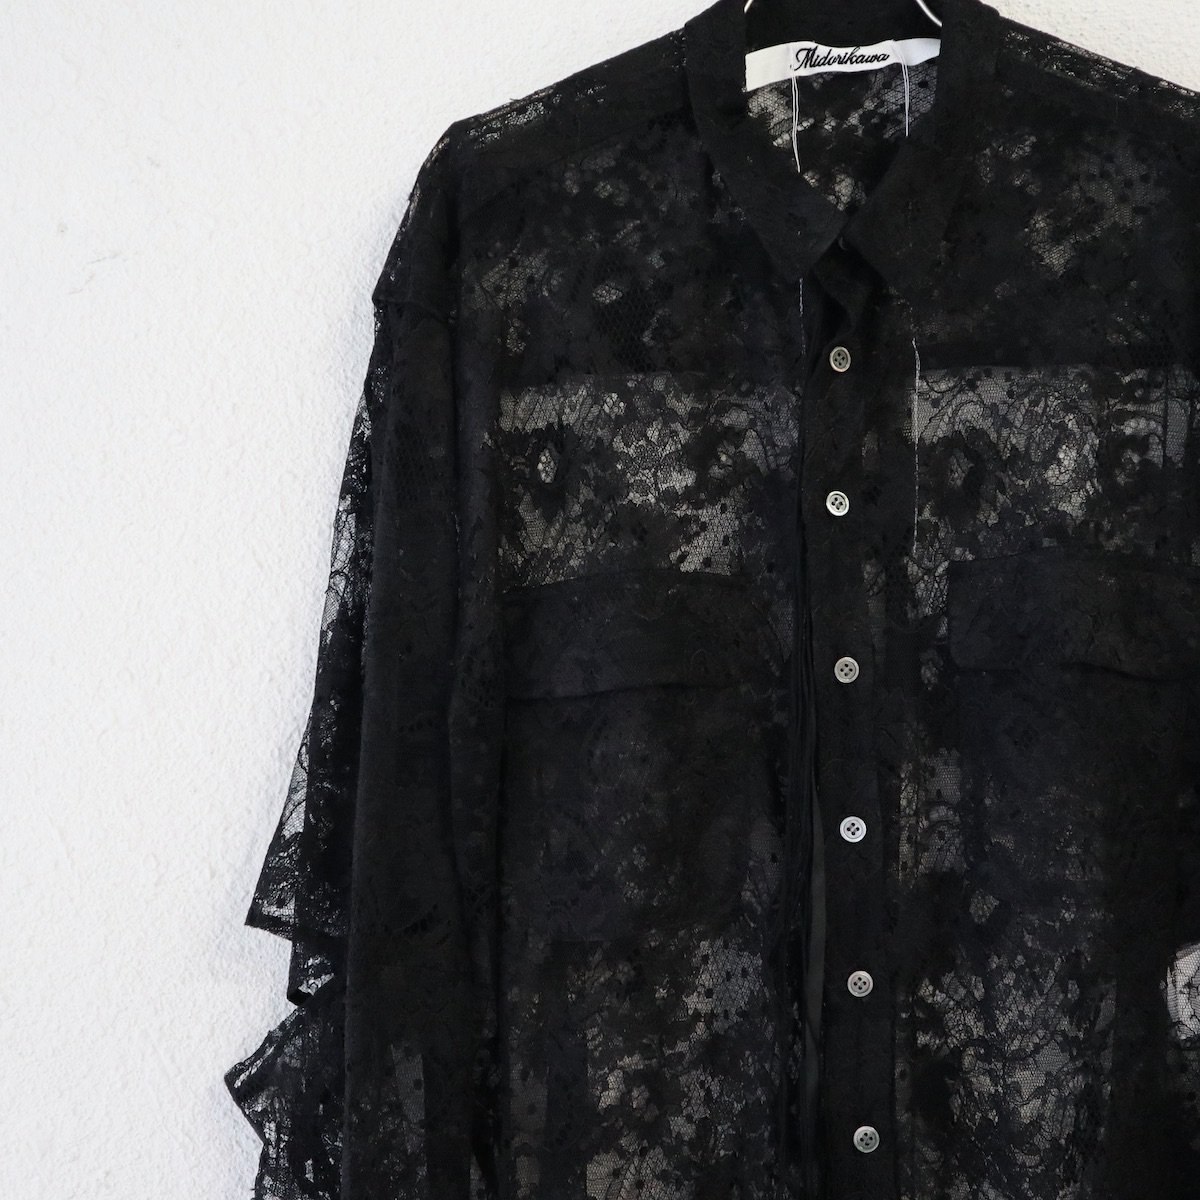 Midorikawa / Lace shirt-Midorikawaの通販EQUAL